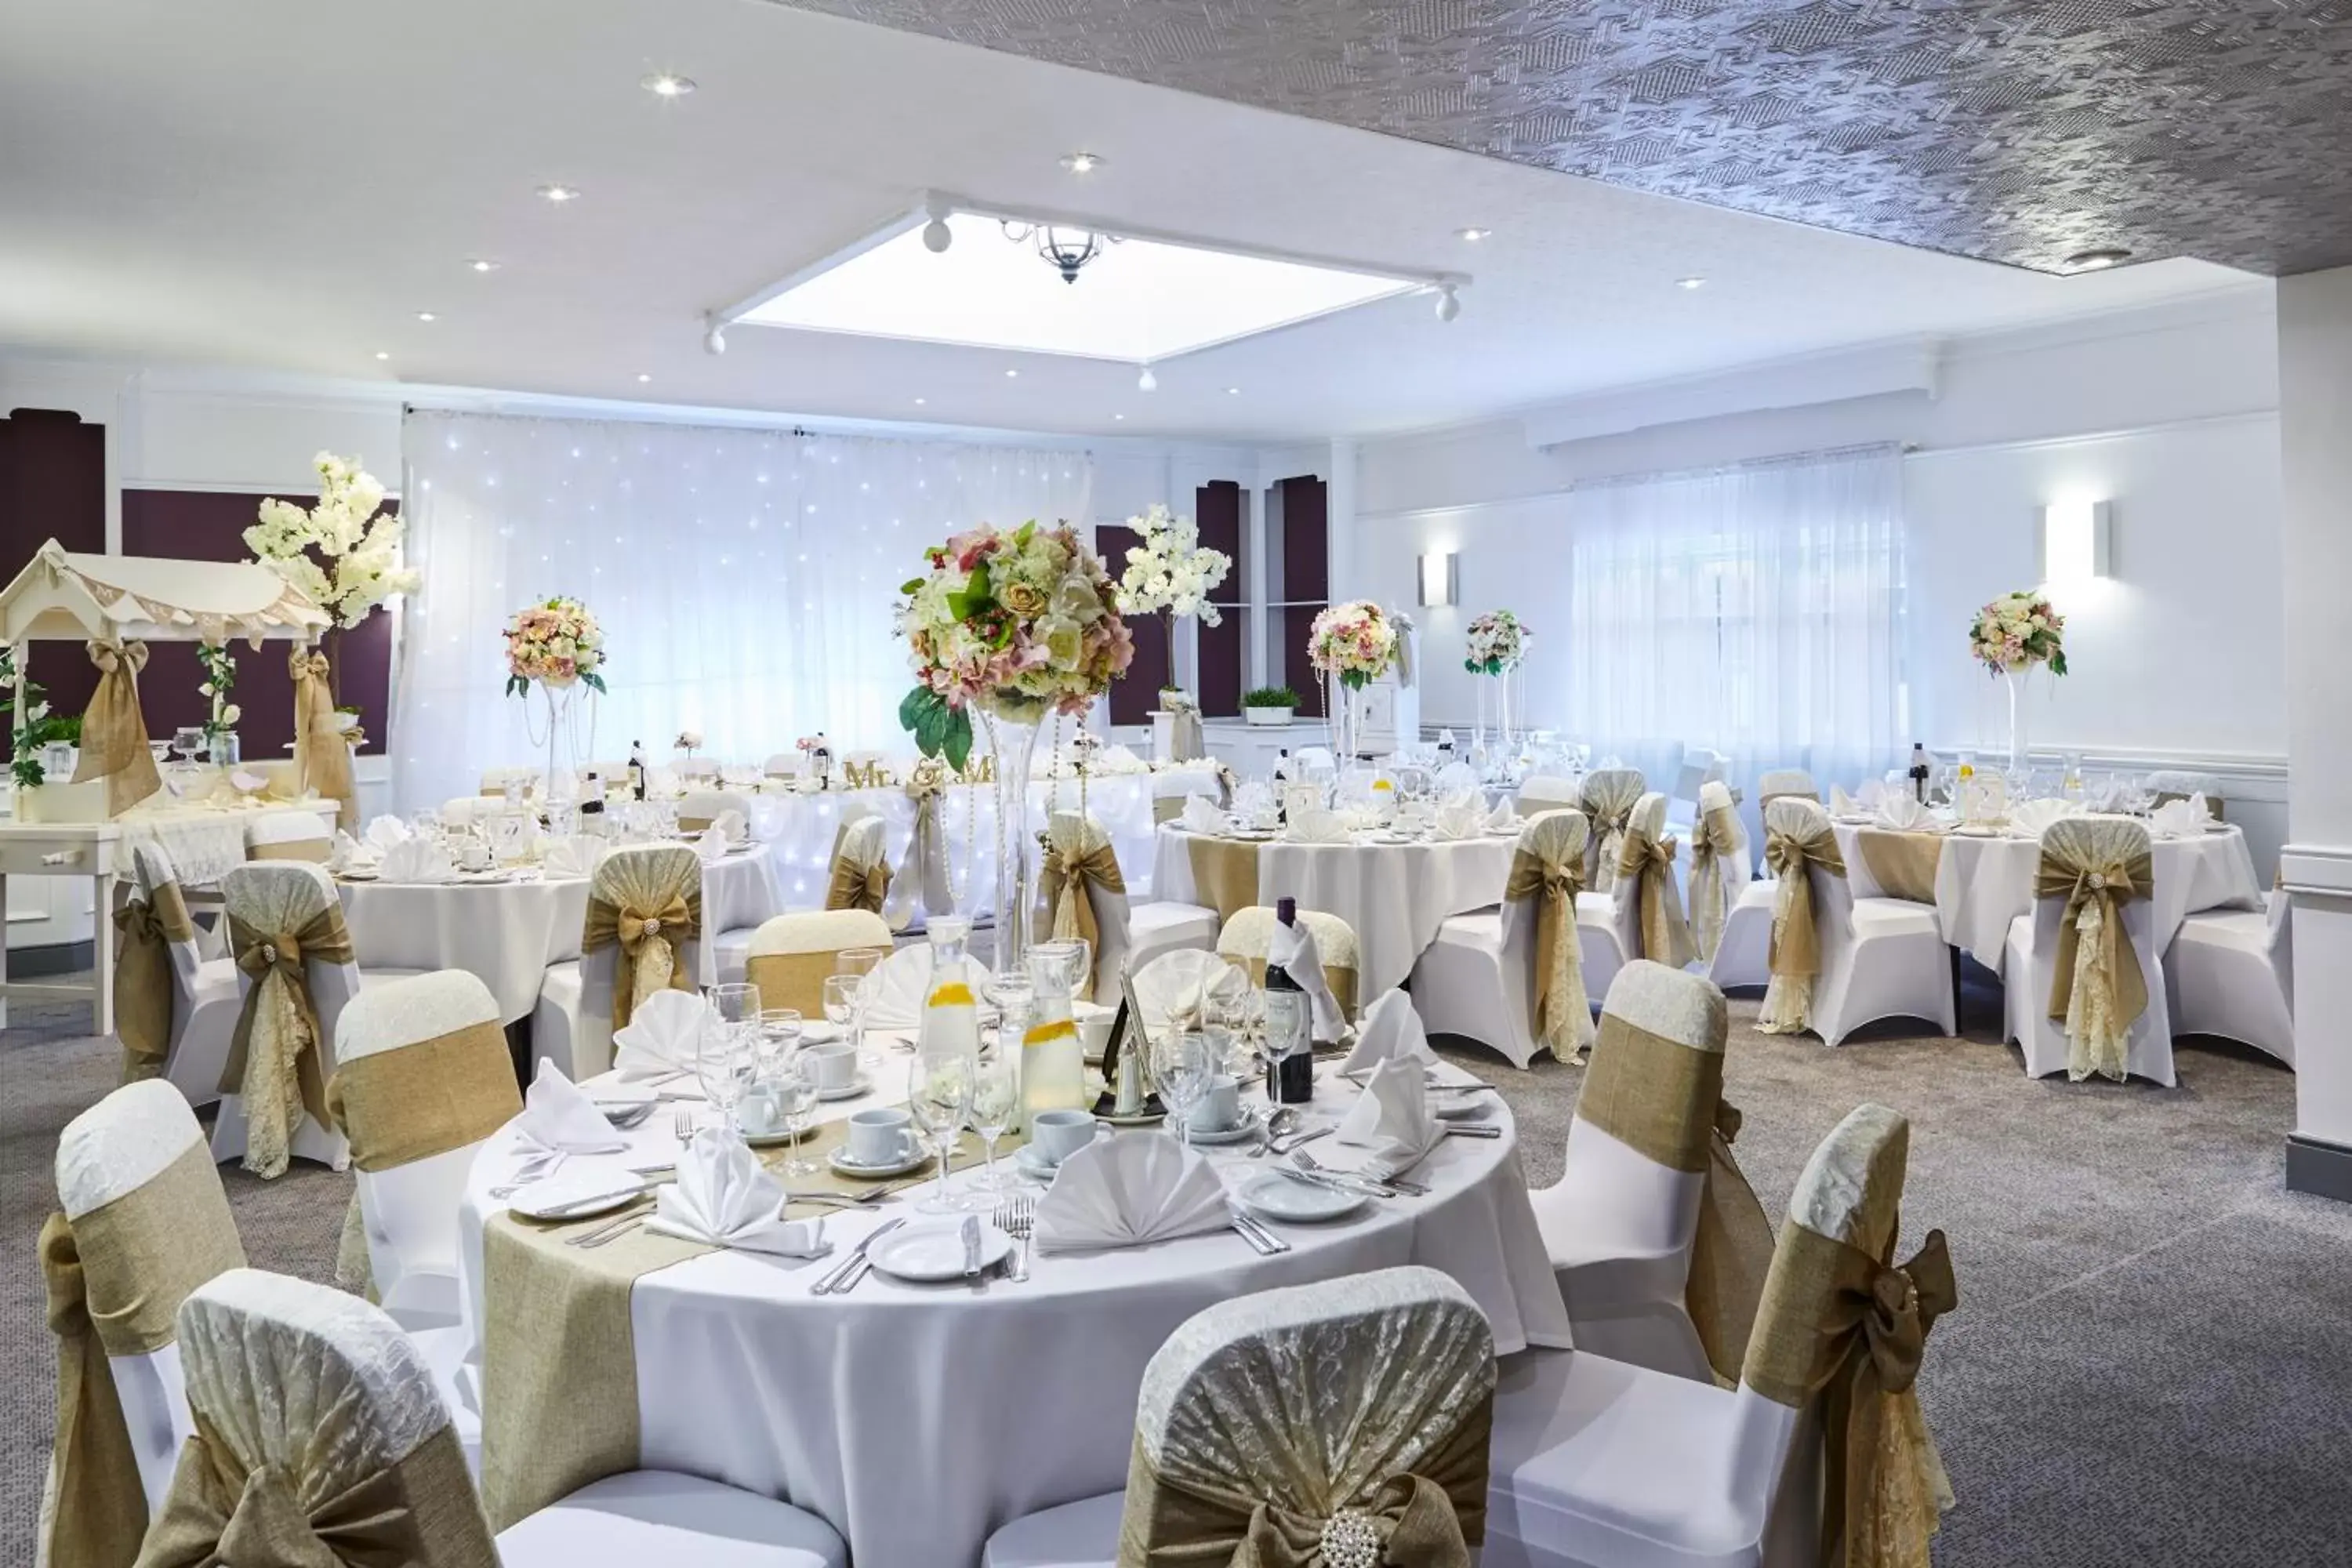 Banquet/Function facilities, Banquet Facilities in Mercure Birmingham West Hotel